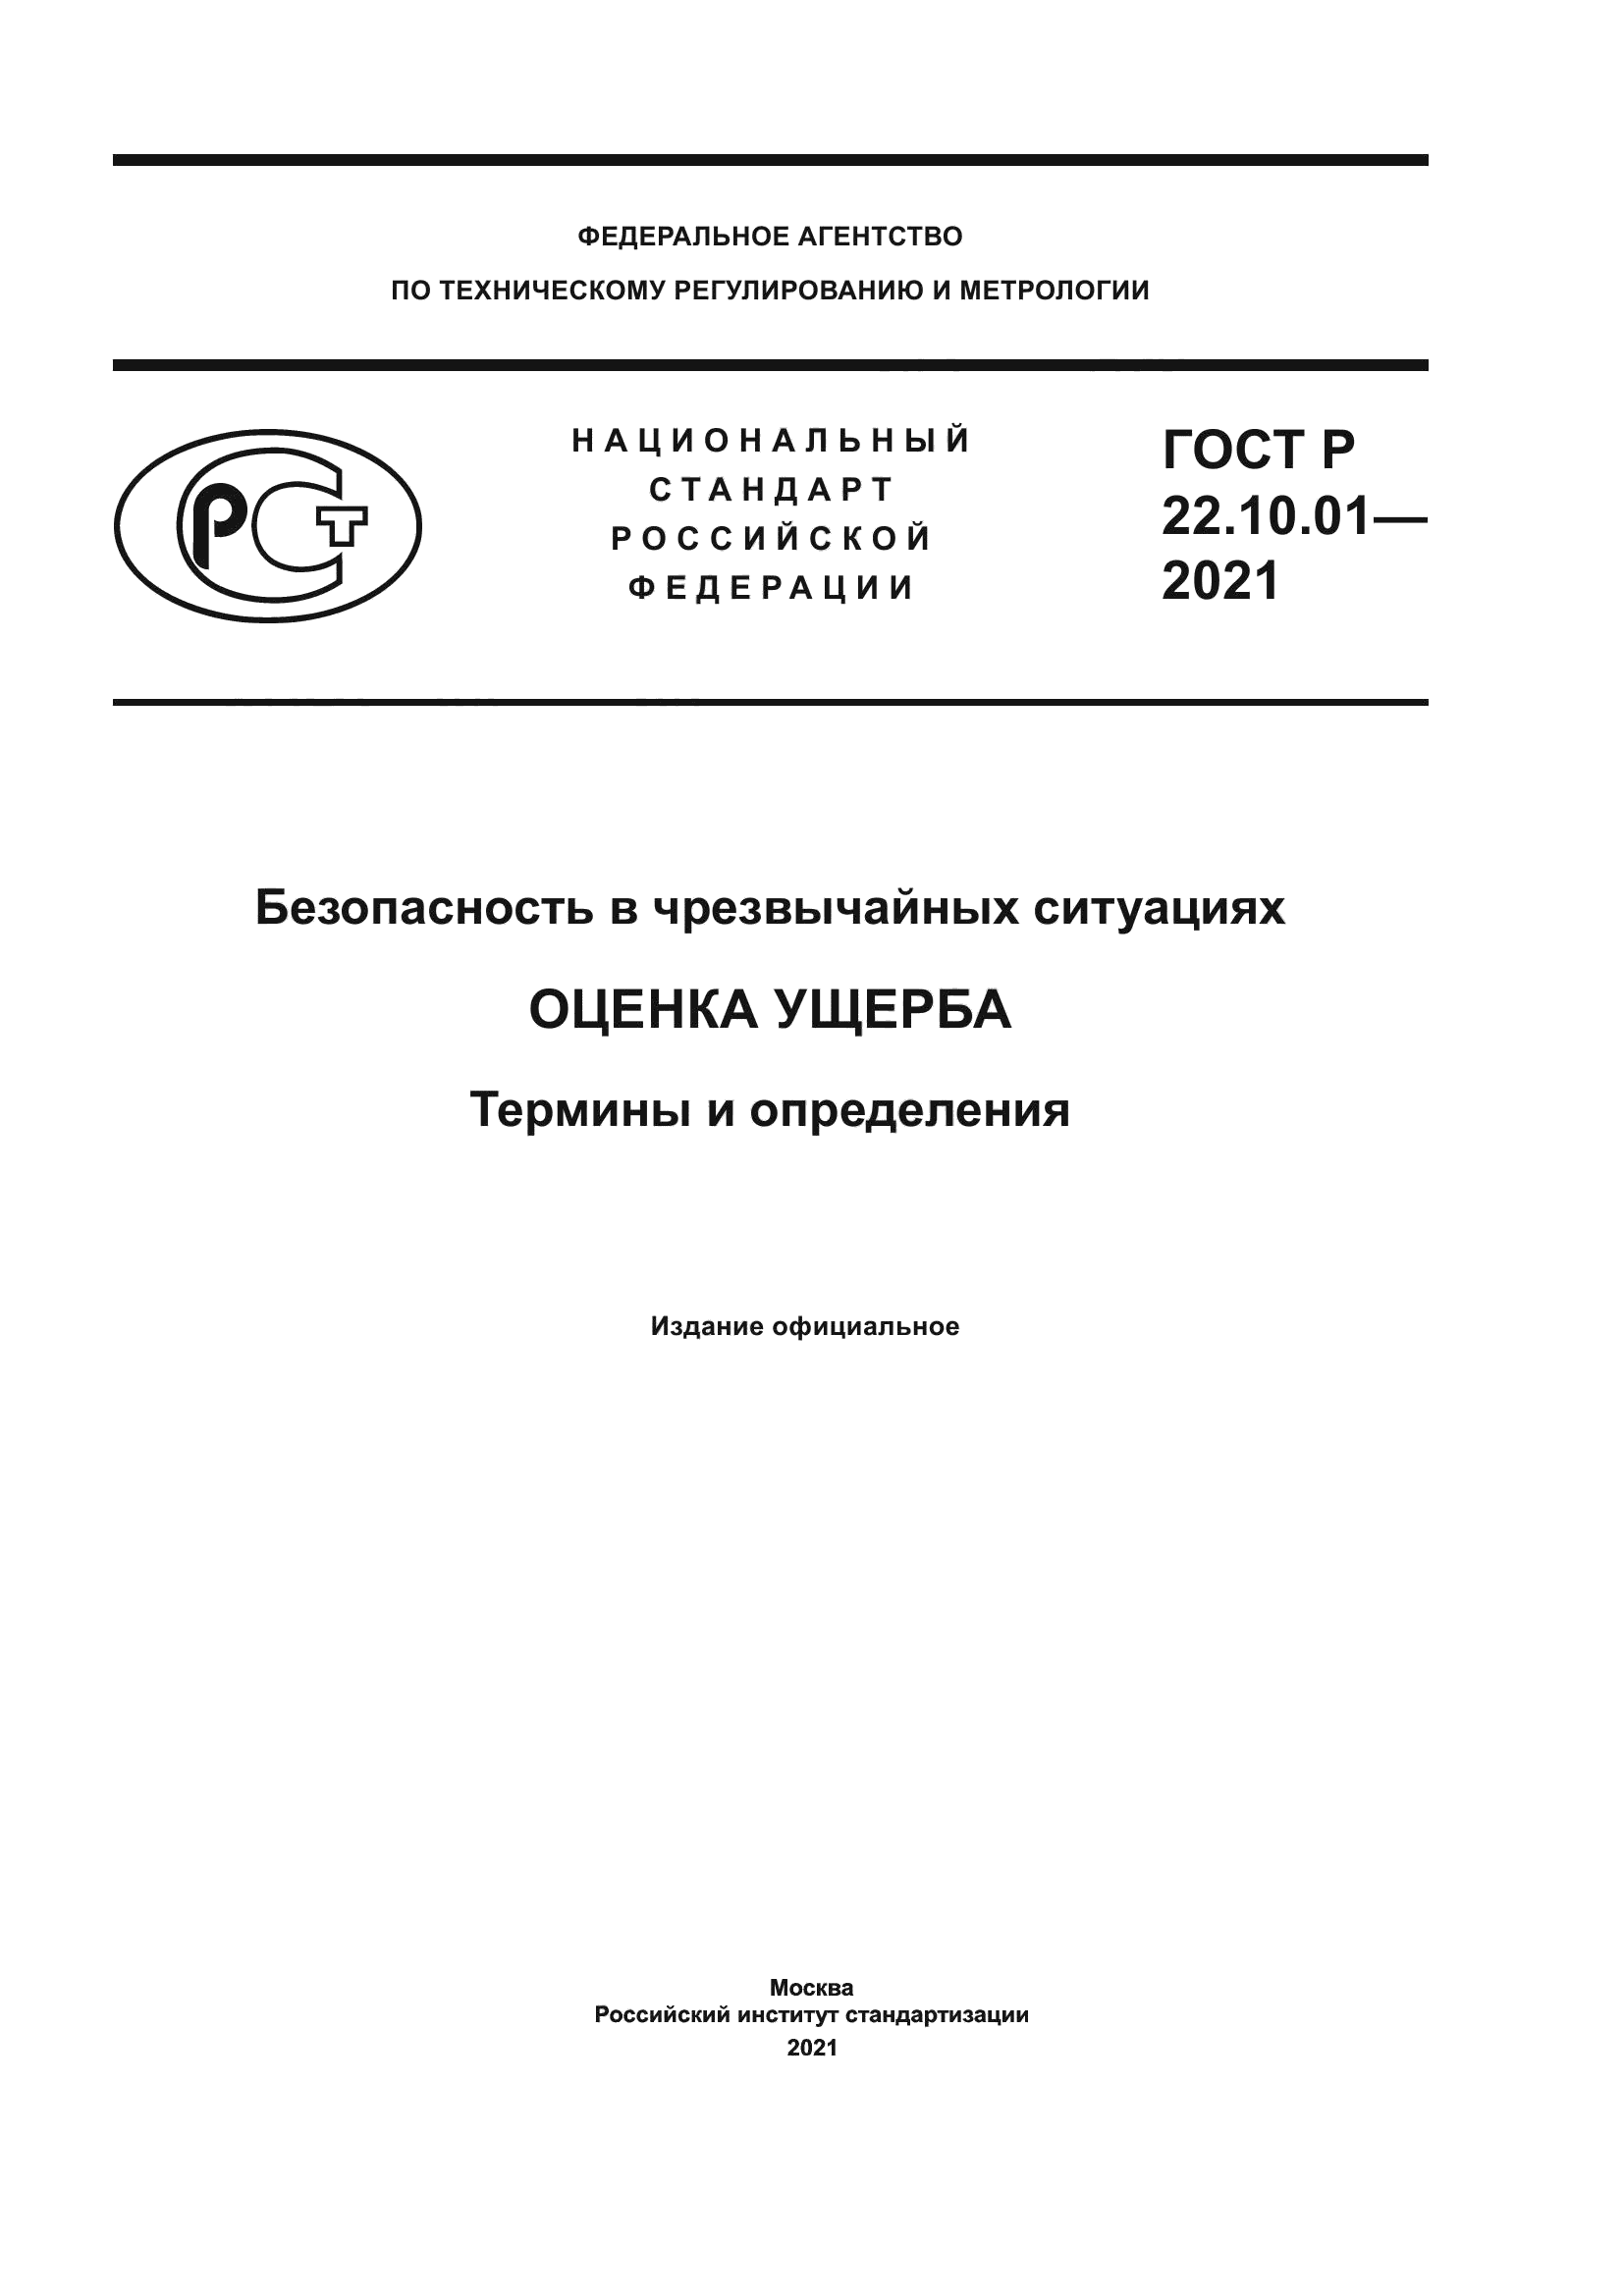 ГОСТ Р 22.10.01-2021